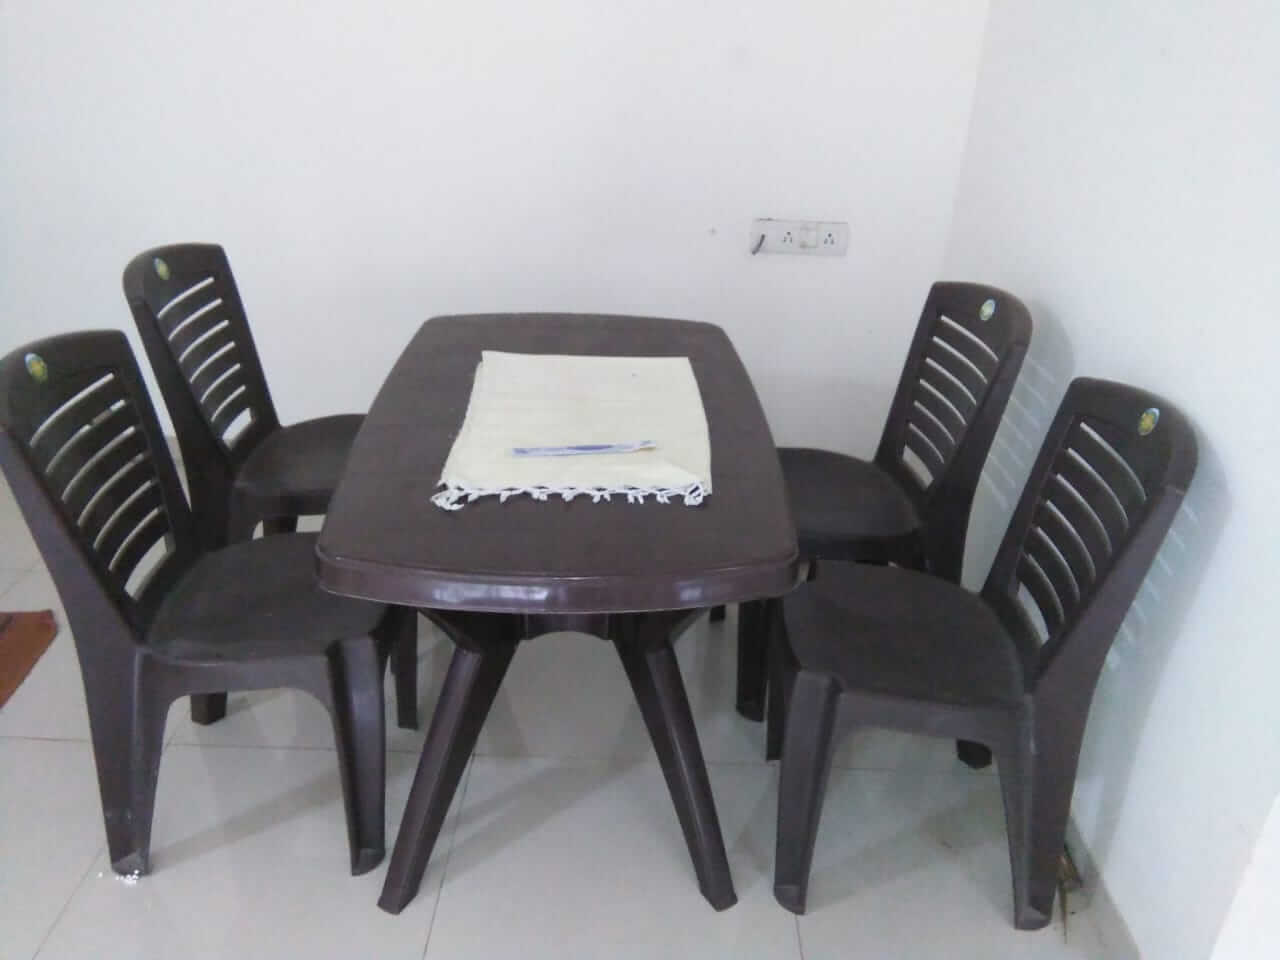 2 BHK Apartment / Flat for Rent 980 Sq. Feet at Pune, Hinjewadi